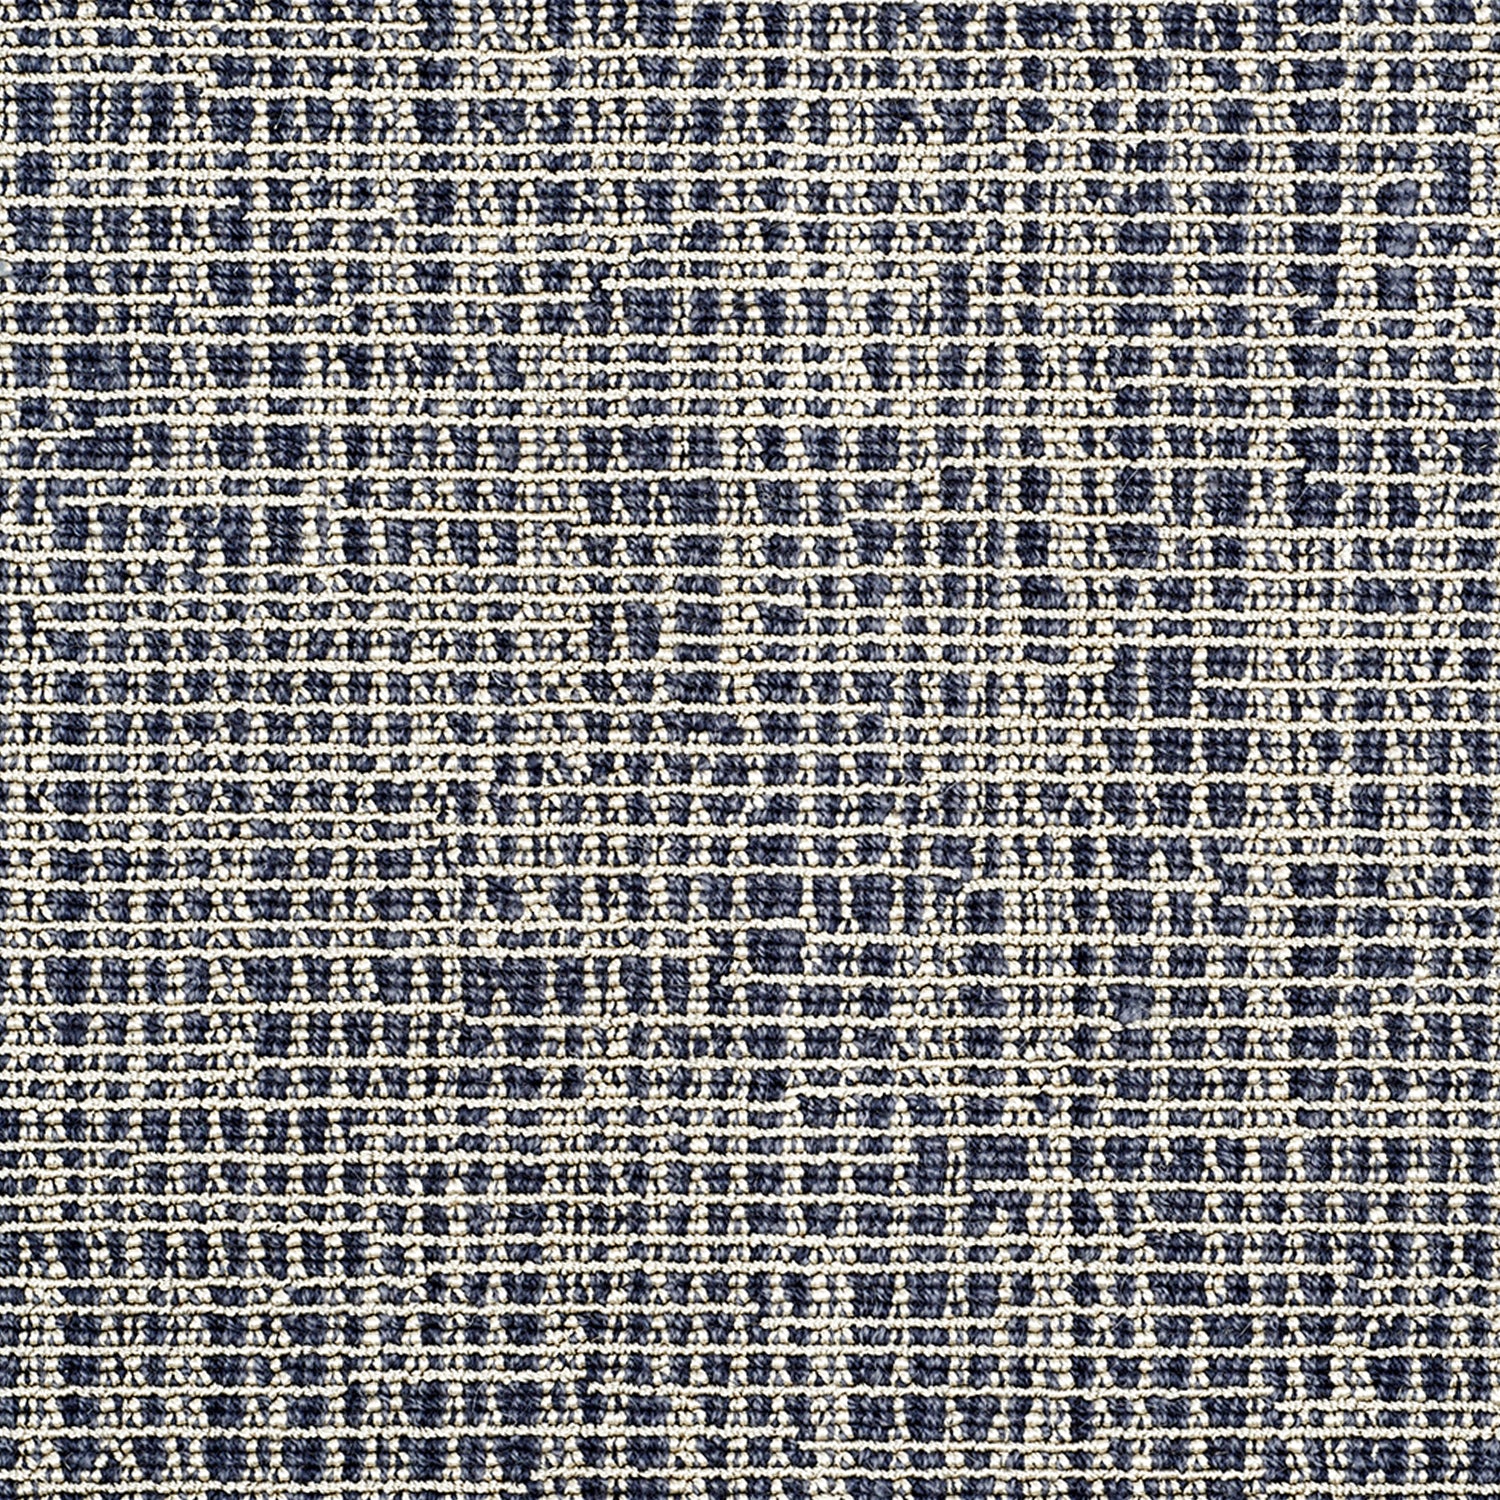 Wool-blend broadloom carpet swatch in a grid weave in mottled cream and navy.